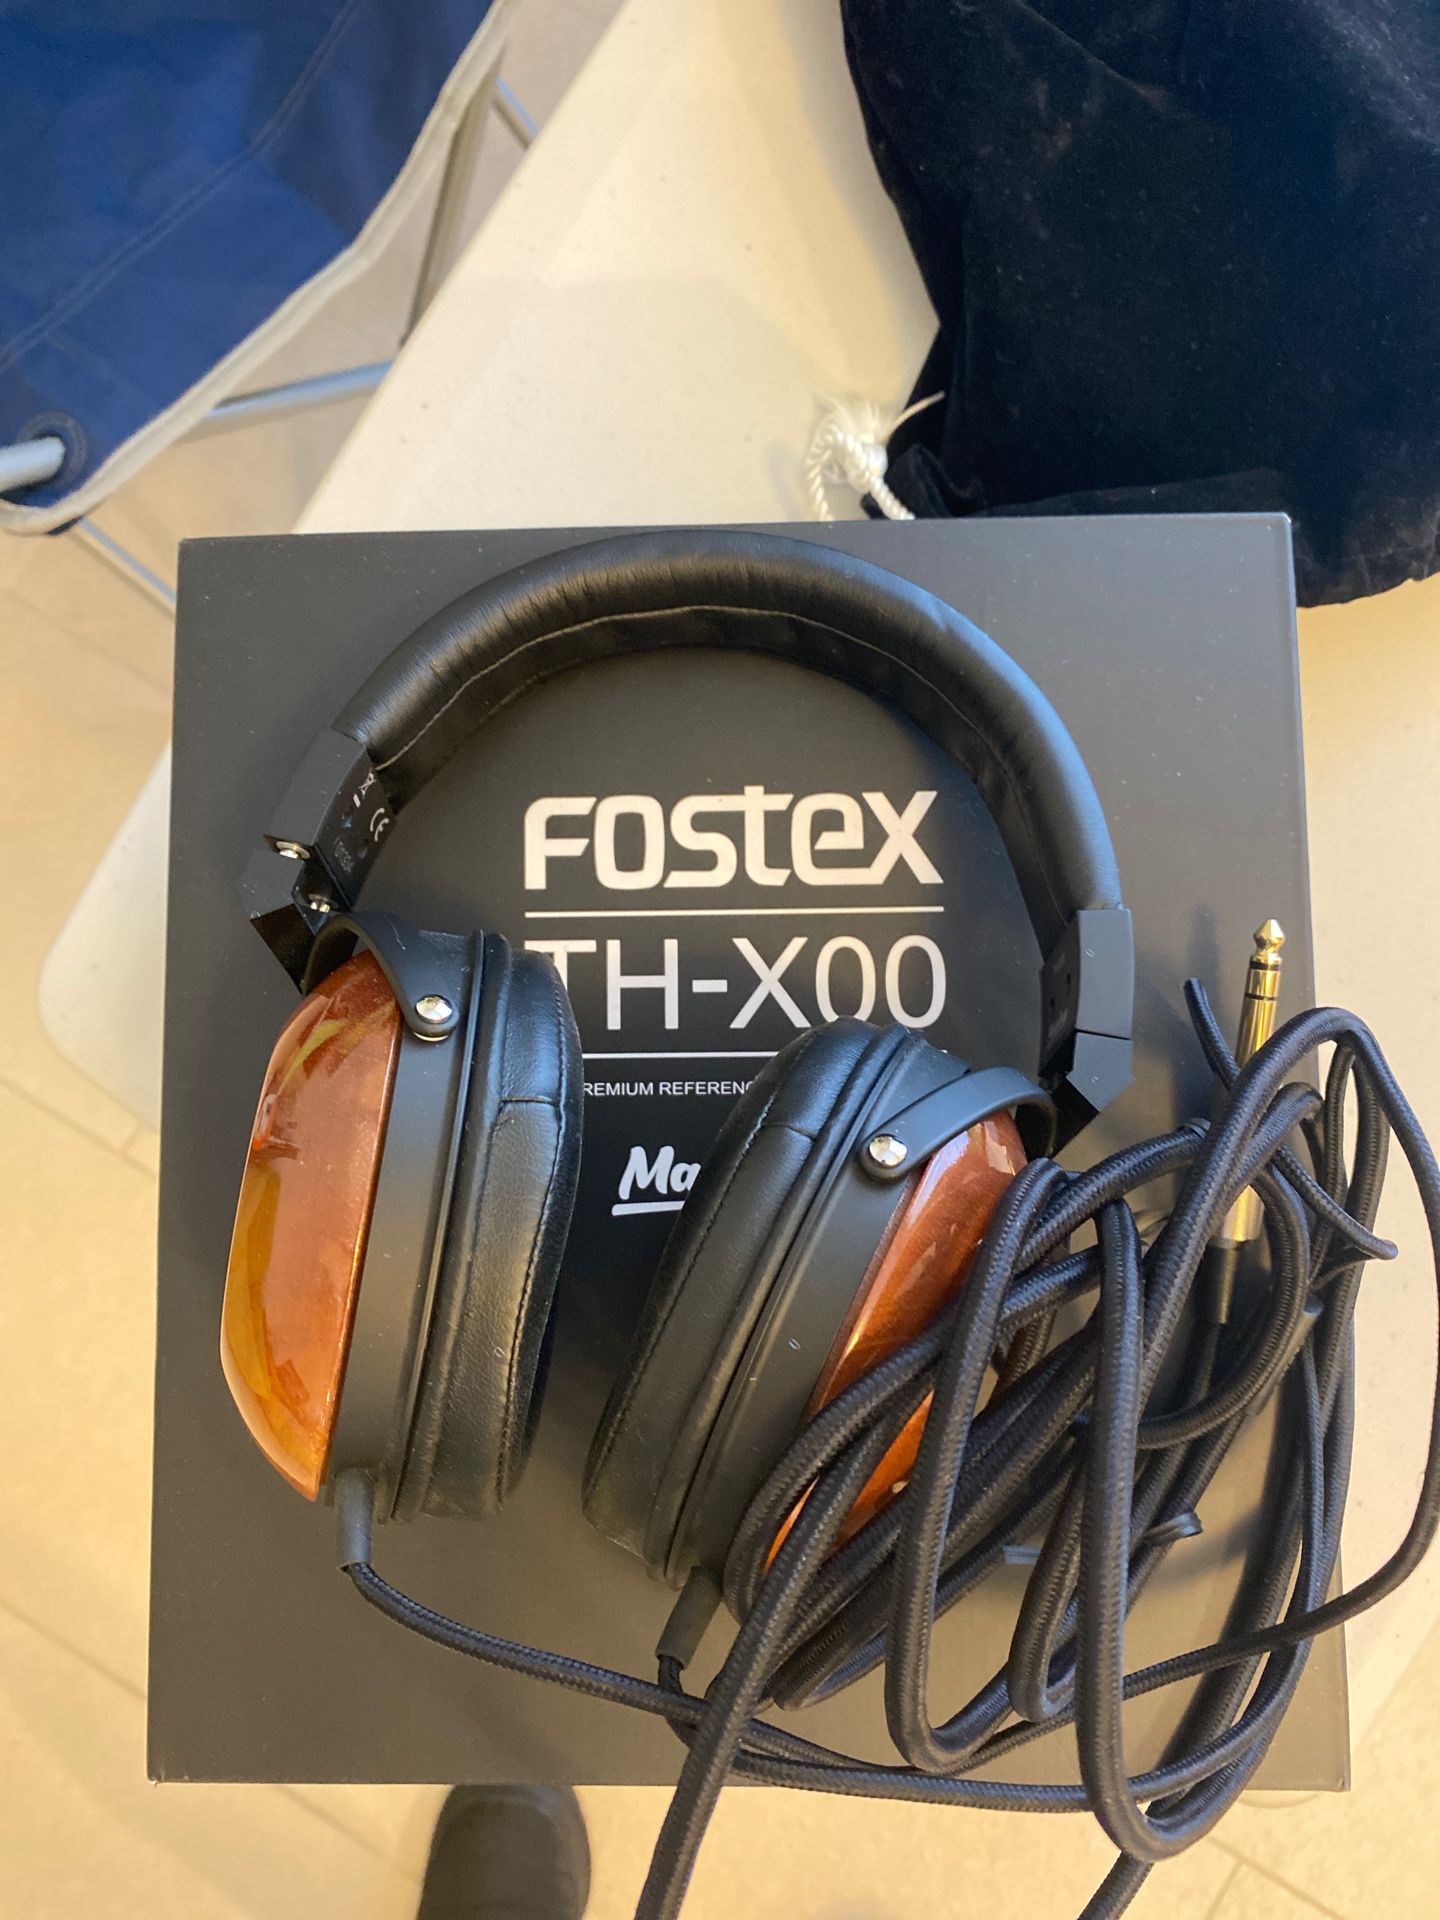 Fostex TH-X00 audiophile headphone